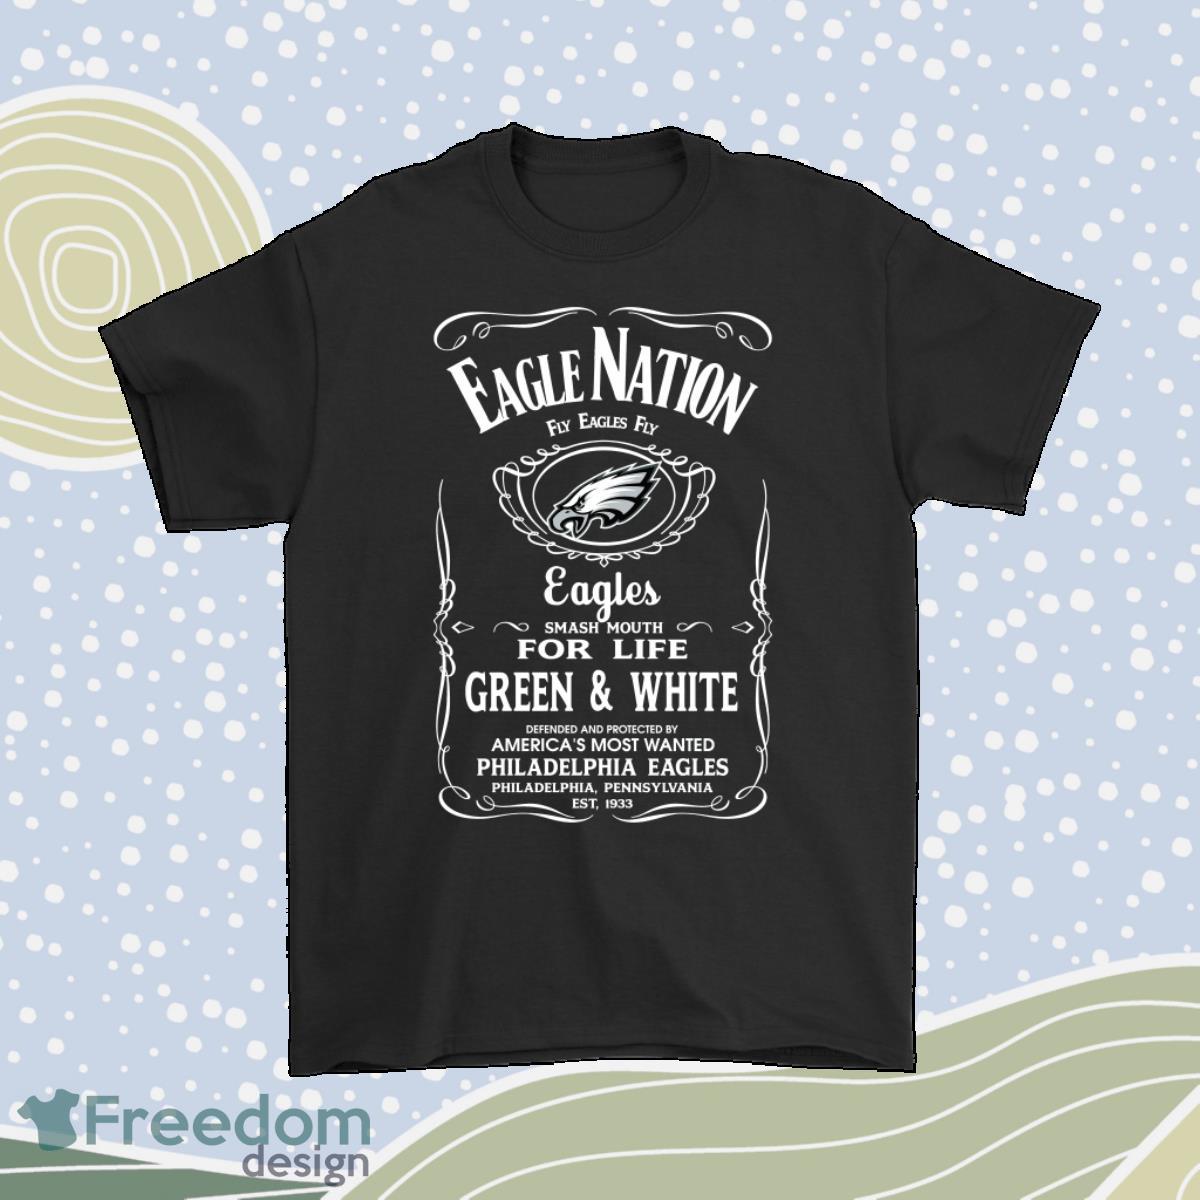 Eagle Nation Fly Eagles Fly Football Philadelphia Eagles Slogan Shirt Product Photo 1